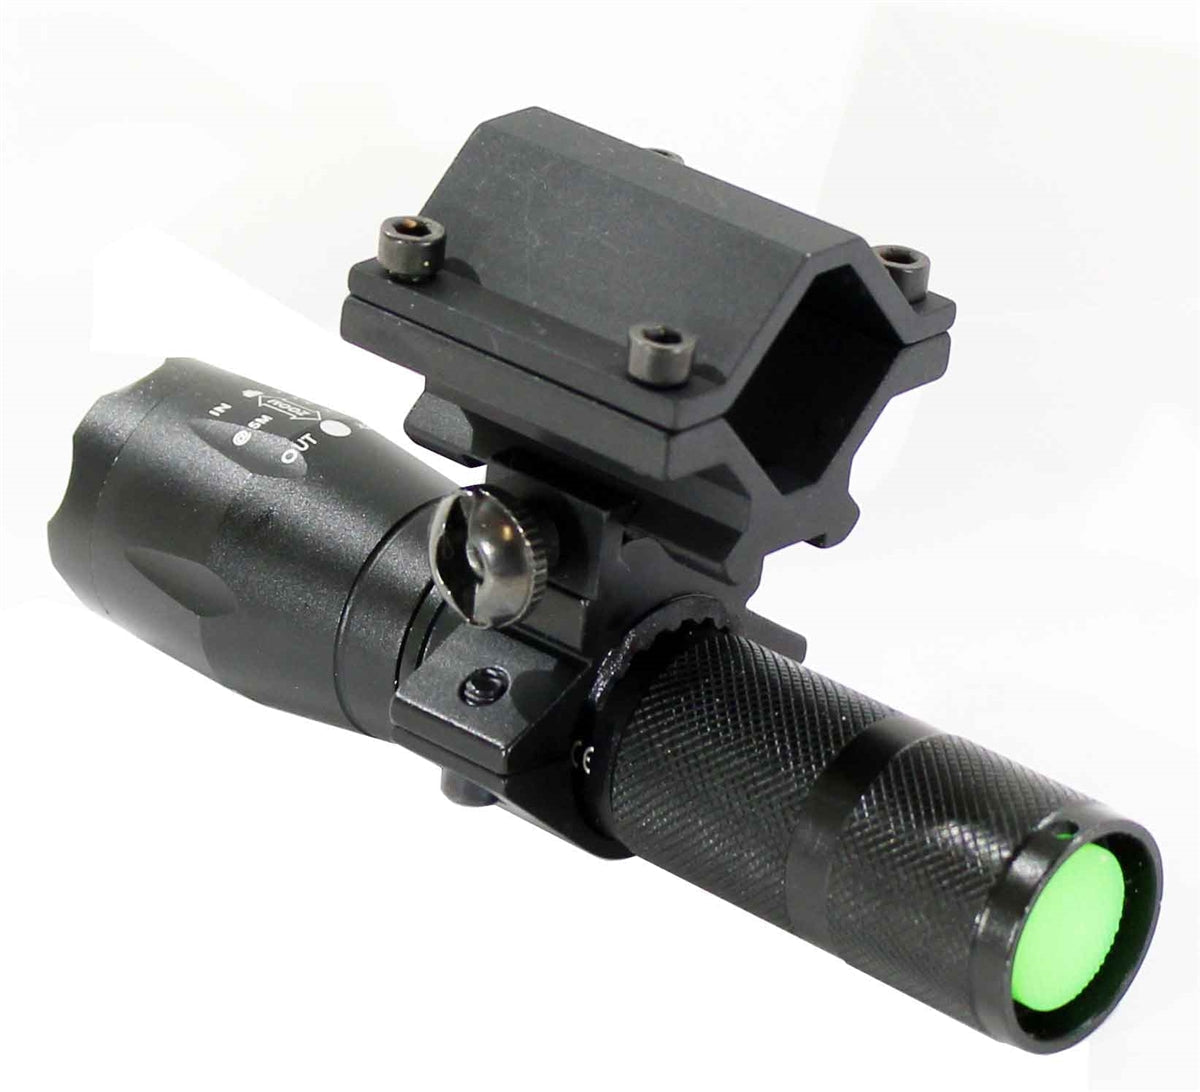 Tactical 1200 Lumen Flashlight With Mount Compatible With Stevens 320 20 Gauge Pumps.